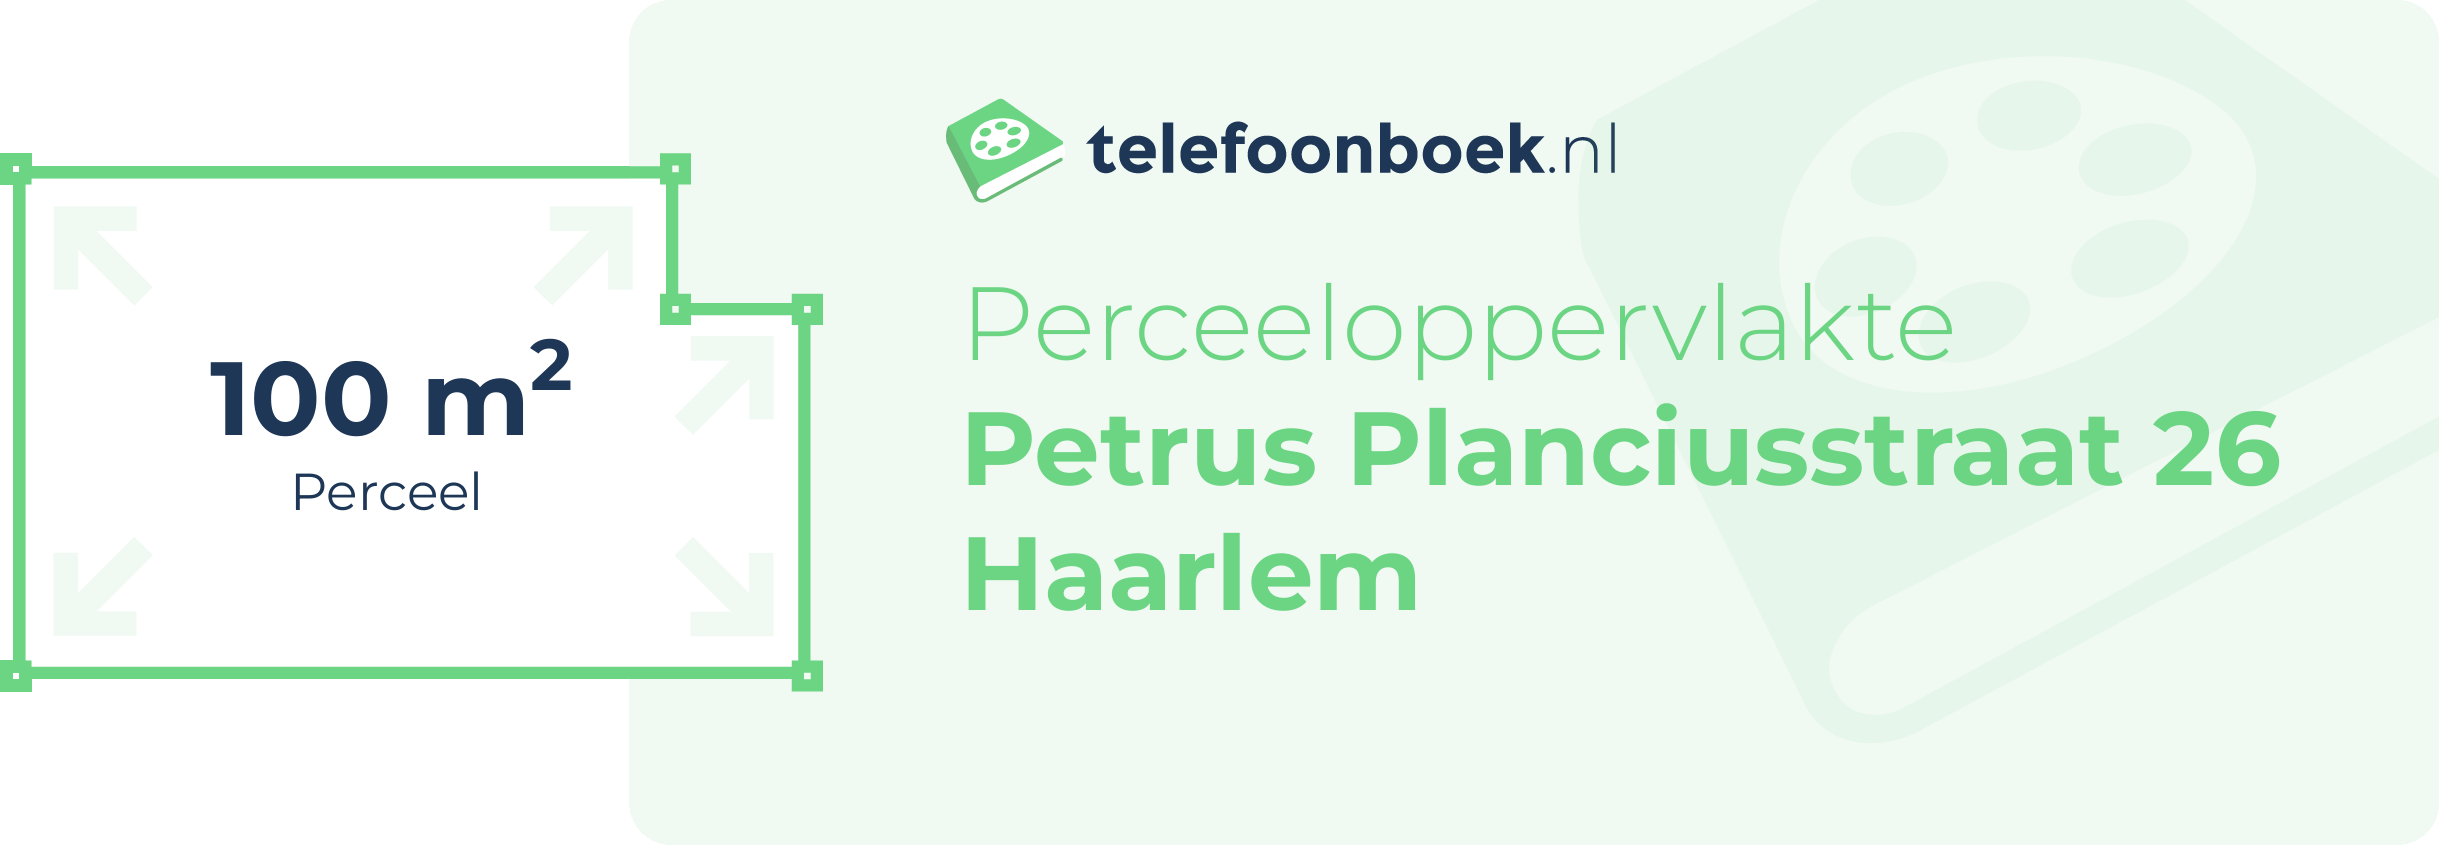 Perceeloppervlakte Petrus Planciusstraat 26 Haarlem